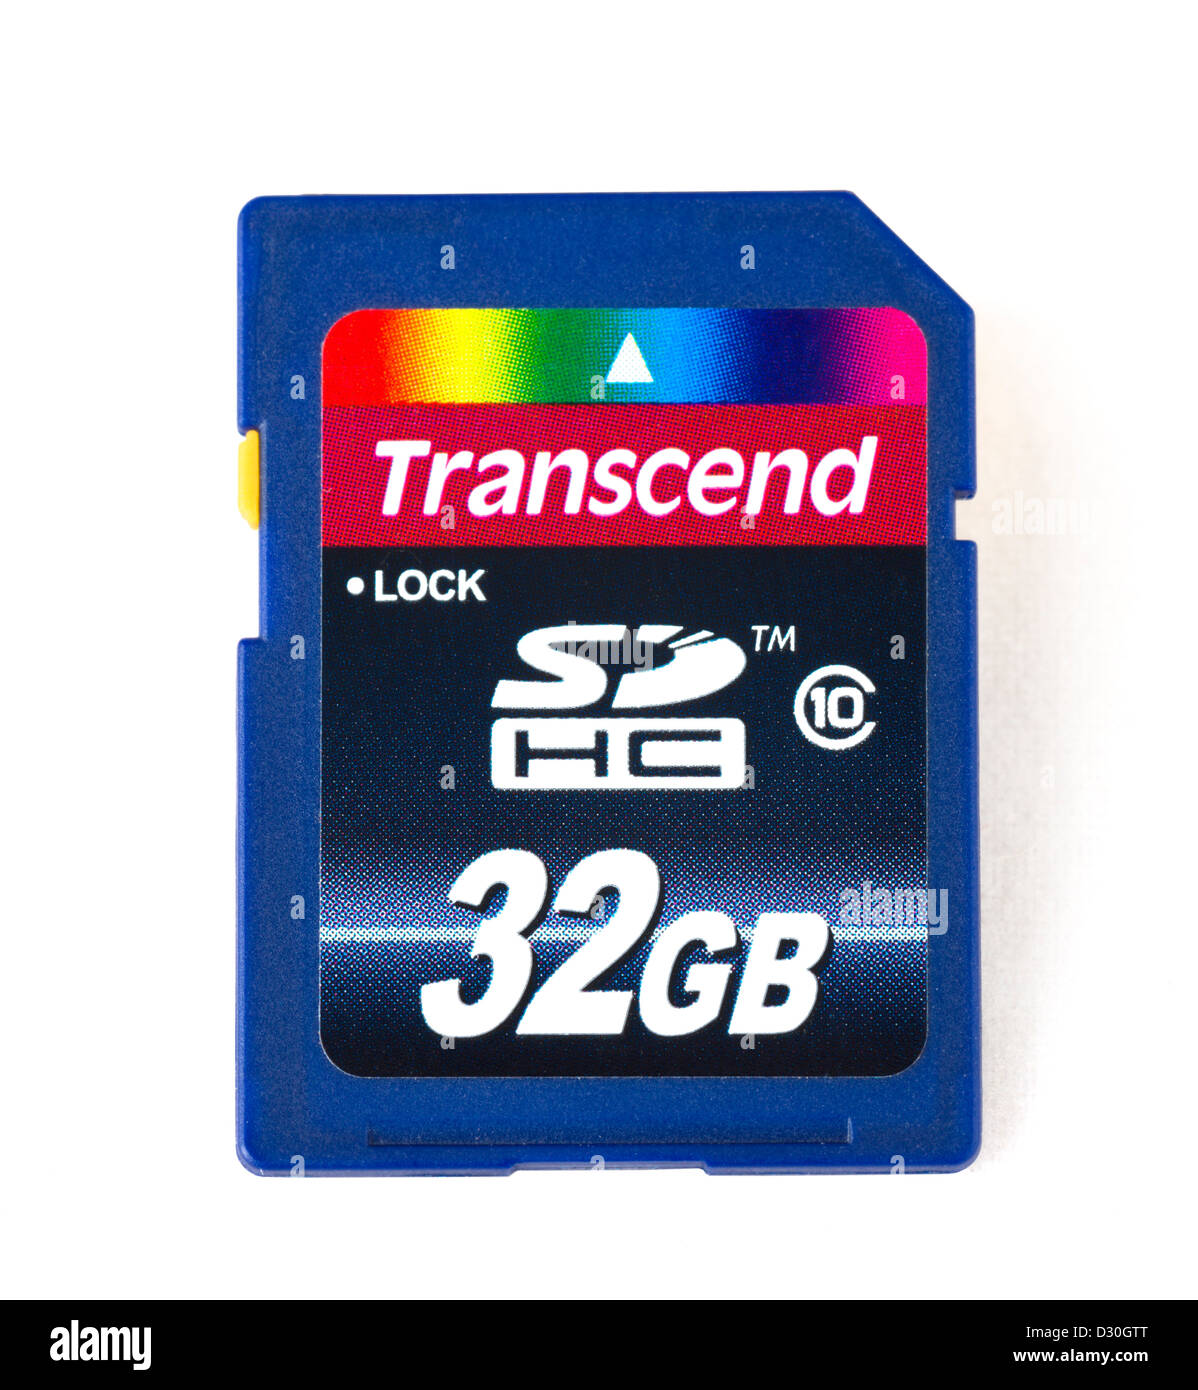 Transcend 32GB SD High Capacity Memory Card Stock Photo